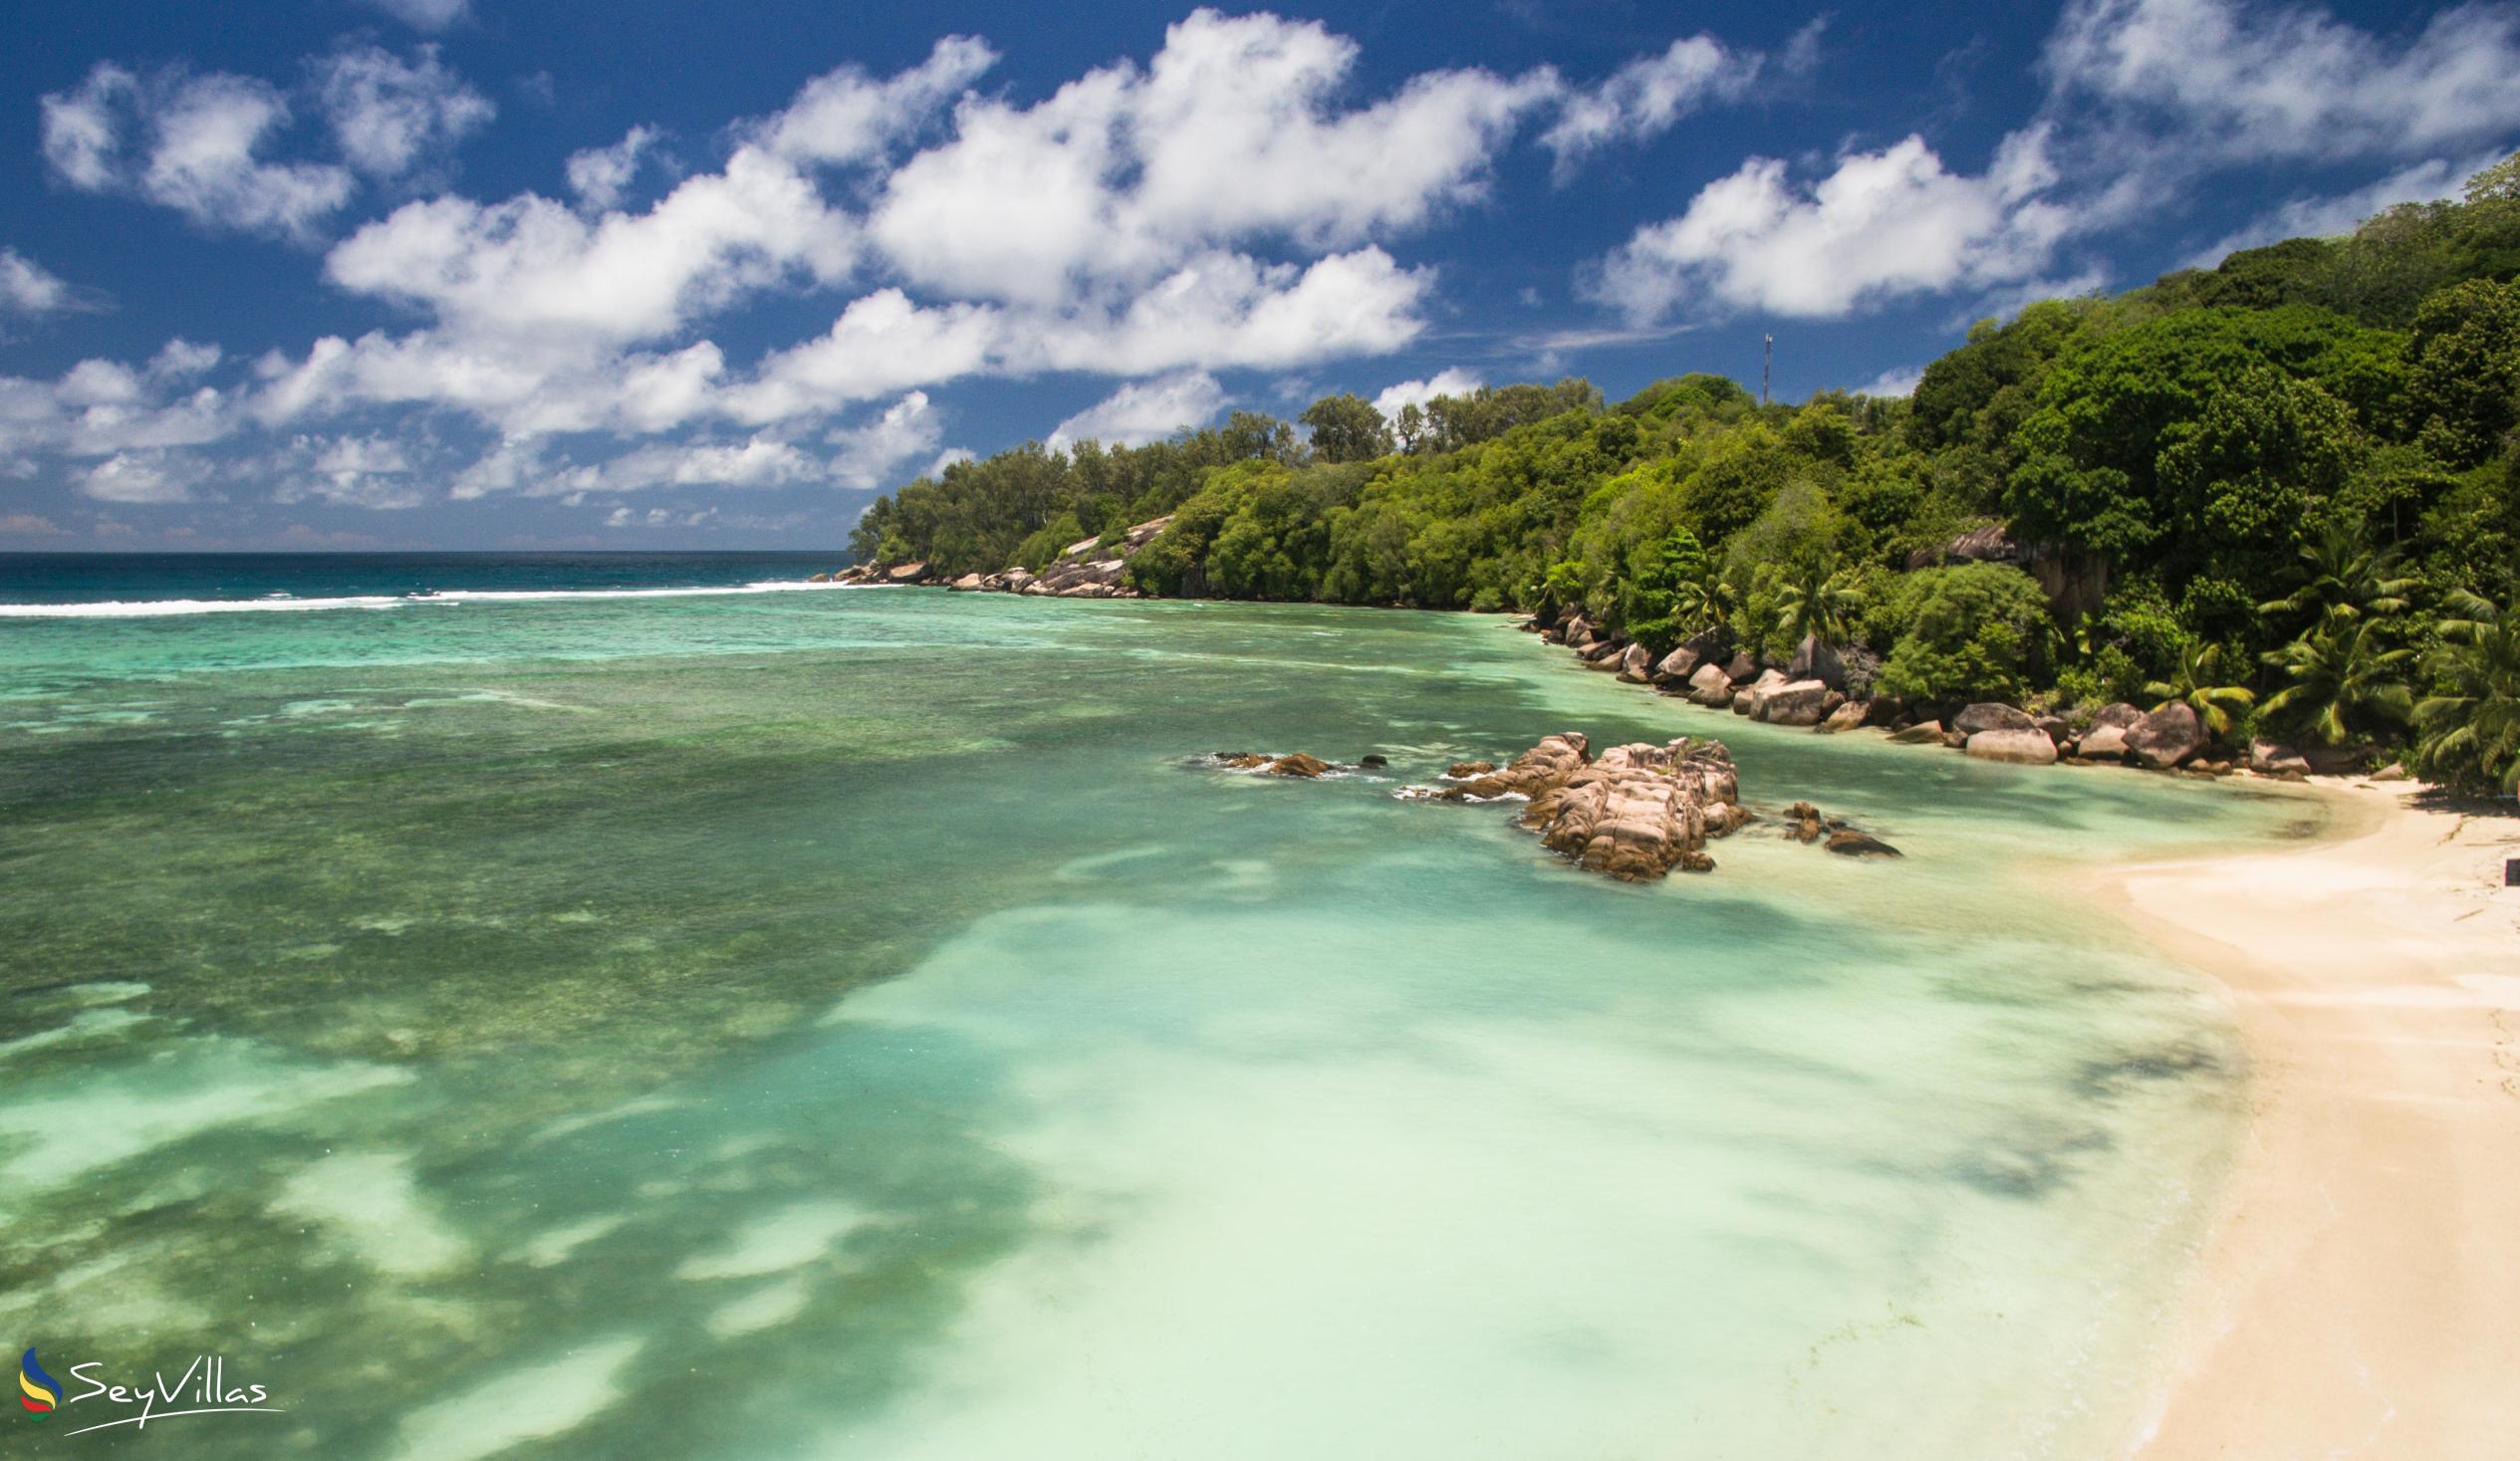 Foto 41: Crown Beach Hotel - Location - Mahé (Seychelles)